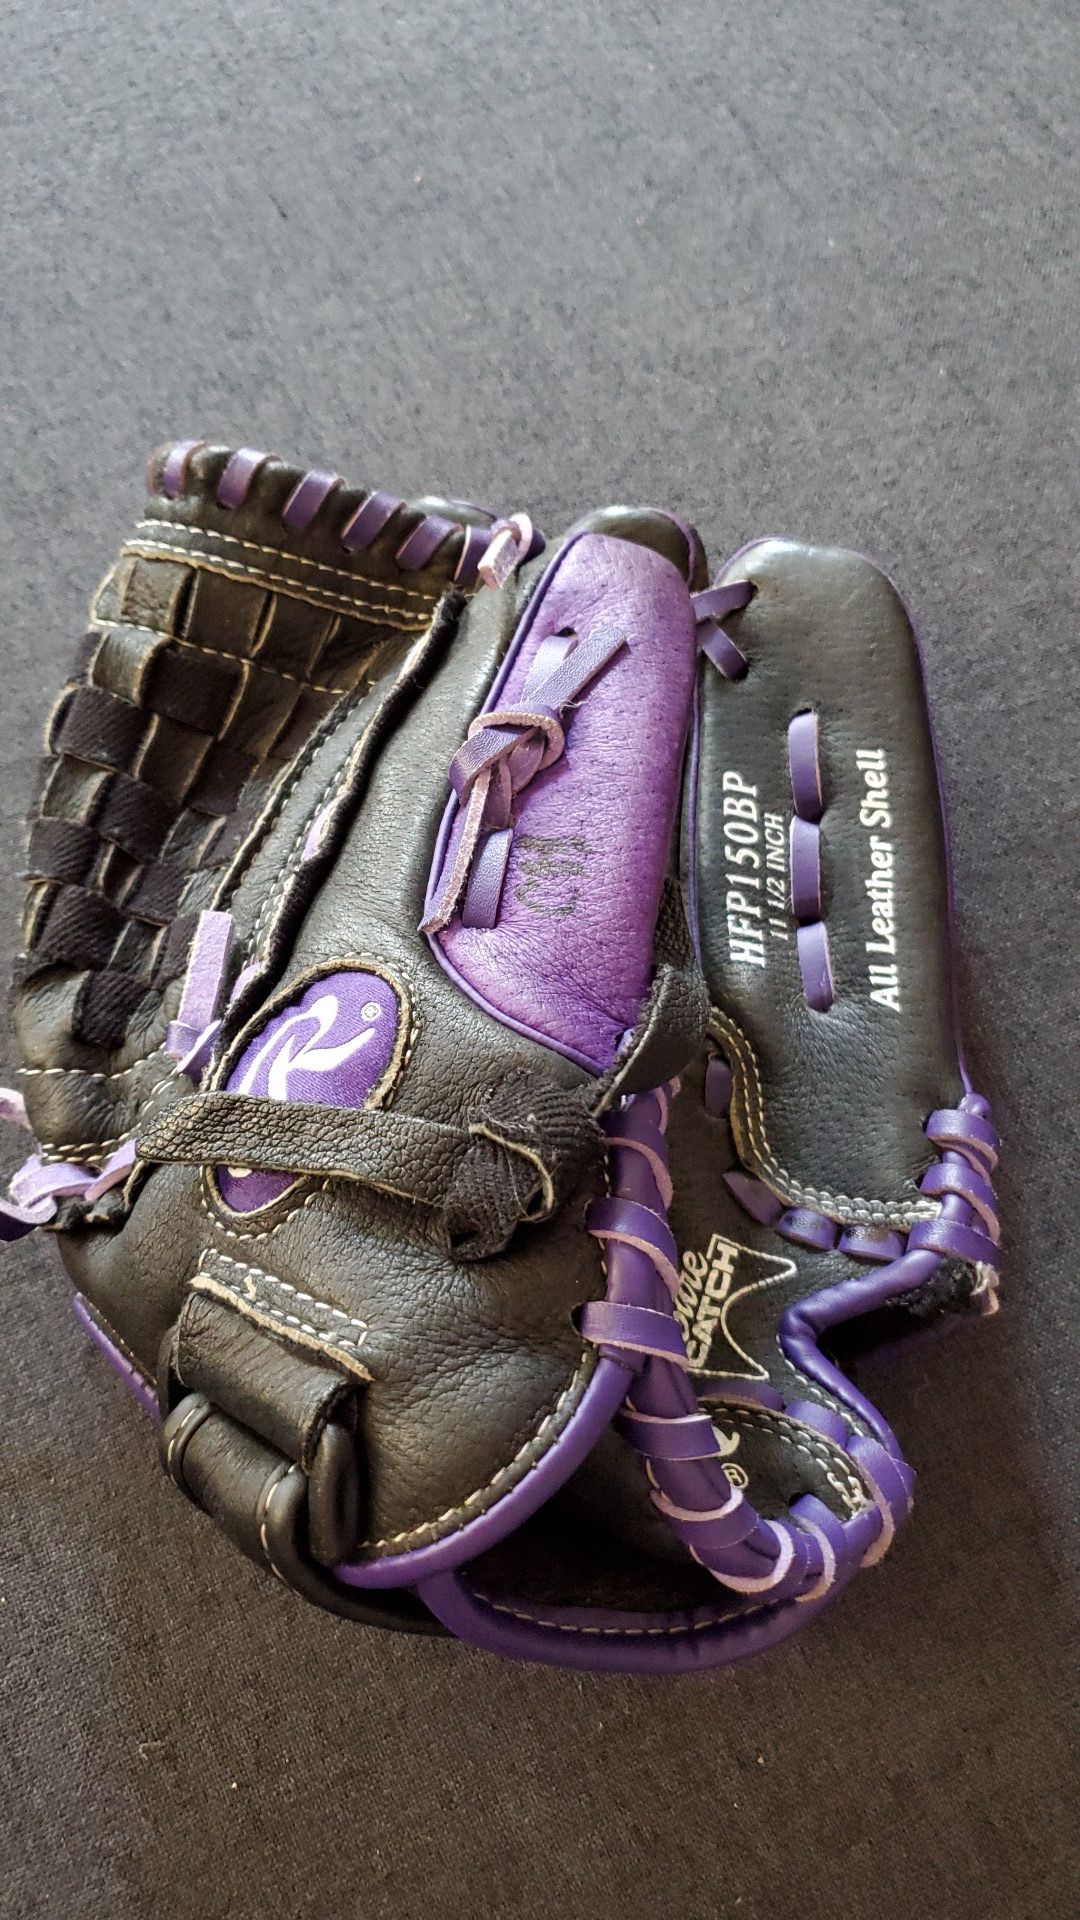 Rawlings 11 1/2 inch softball glove